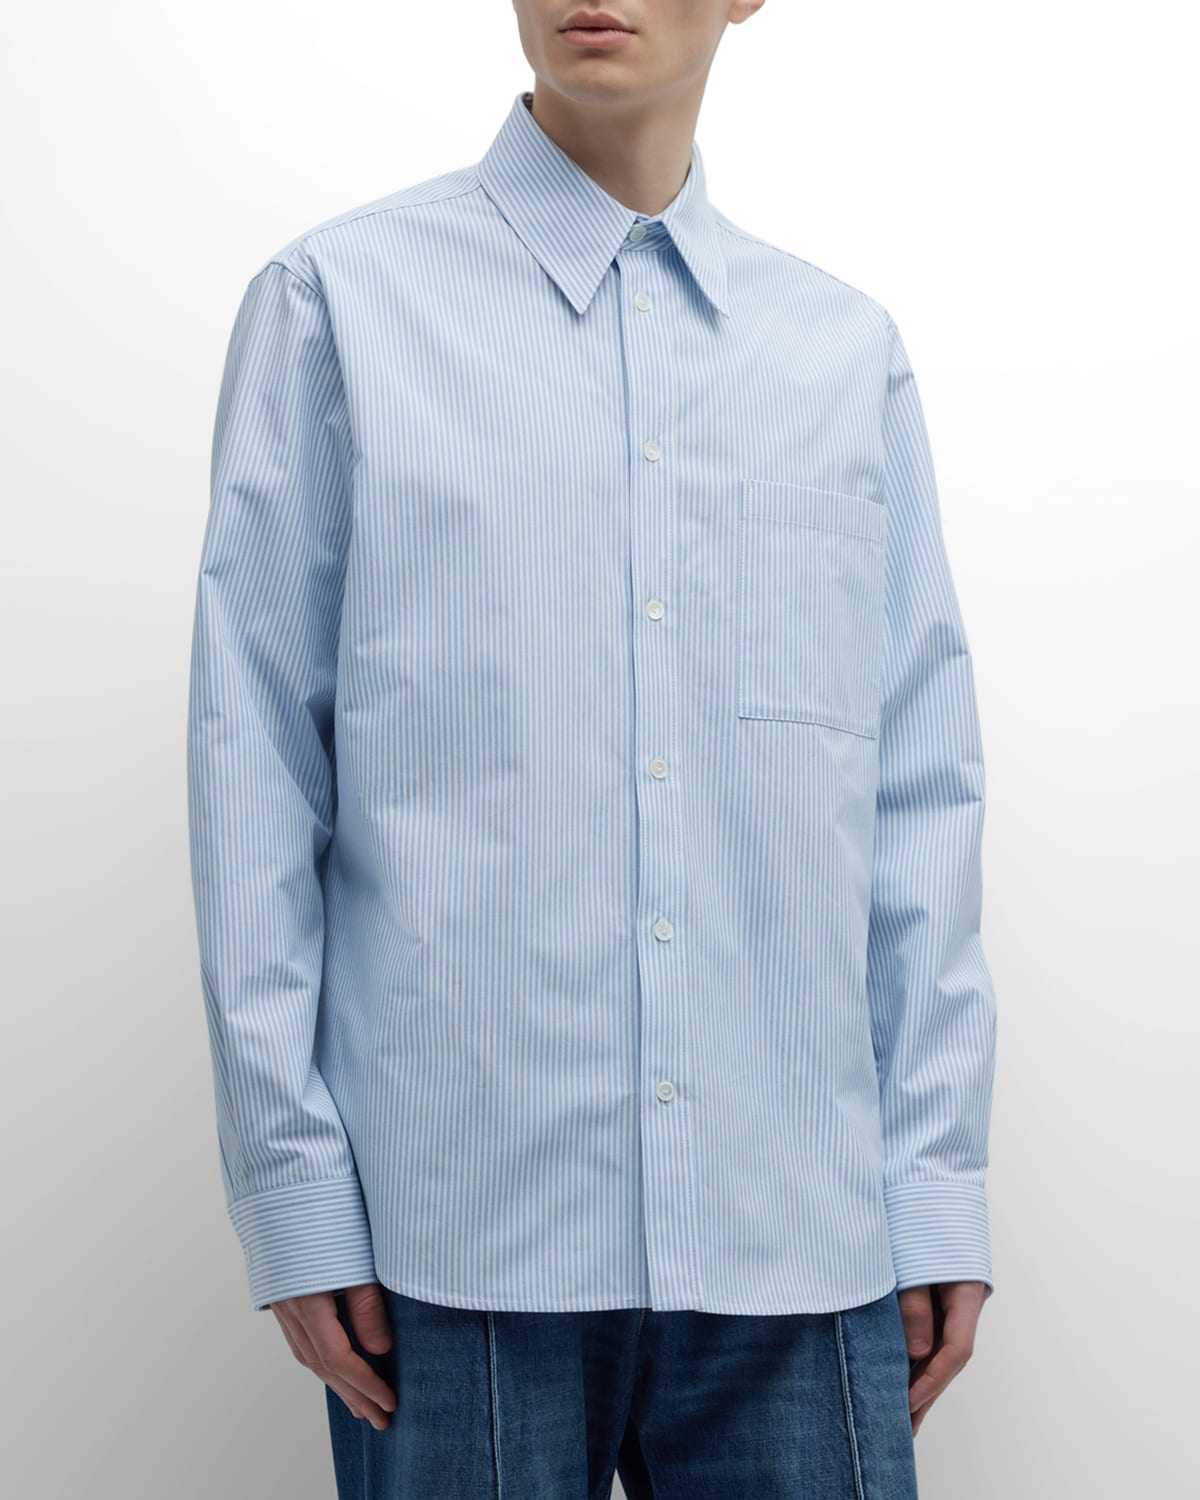 Bottega Veneta® Men's Light Cotton T-Shirt in Camelia. Shop online